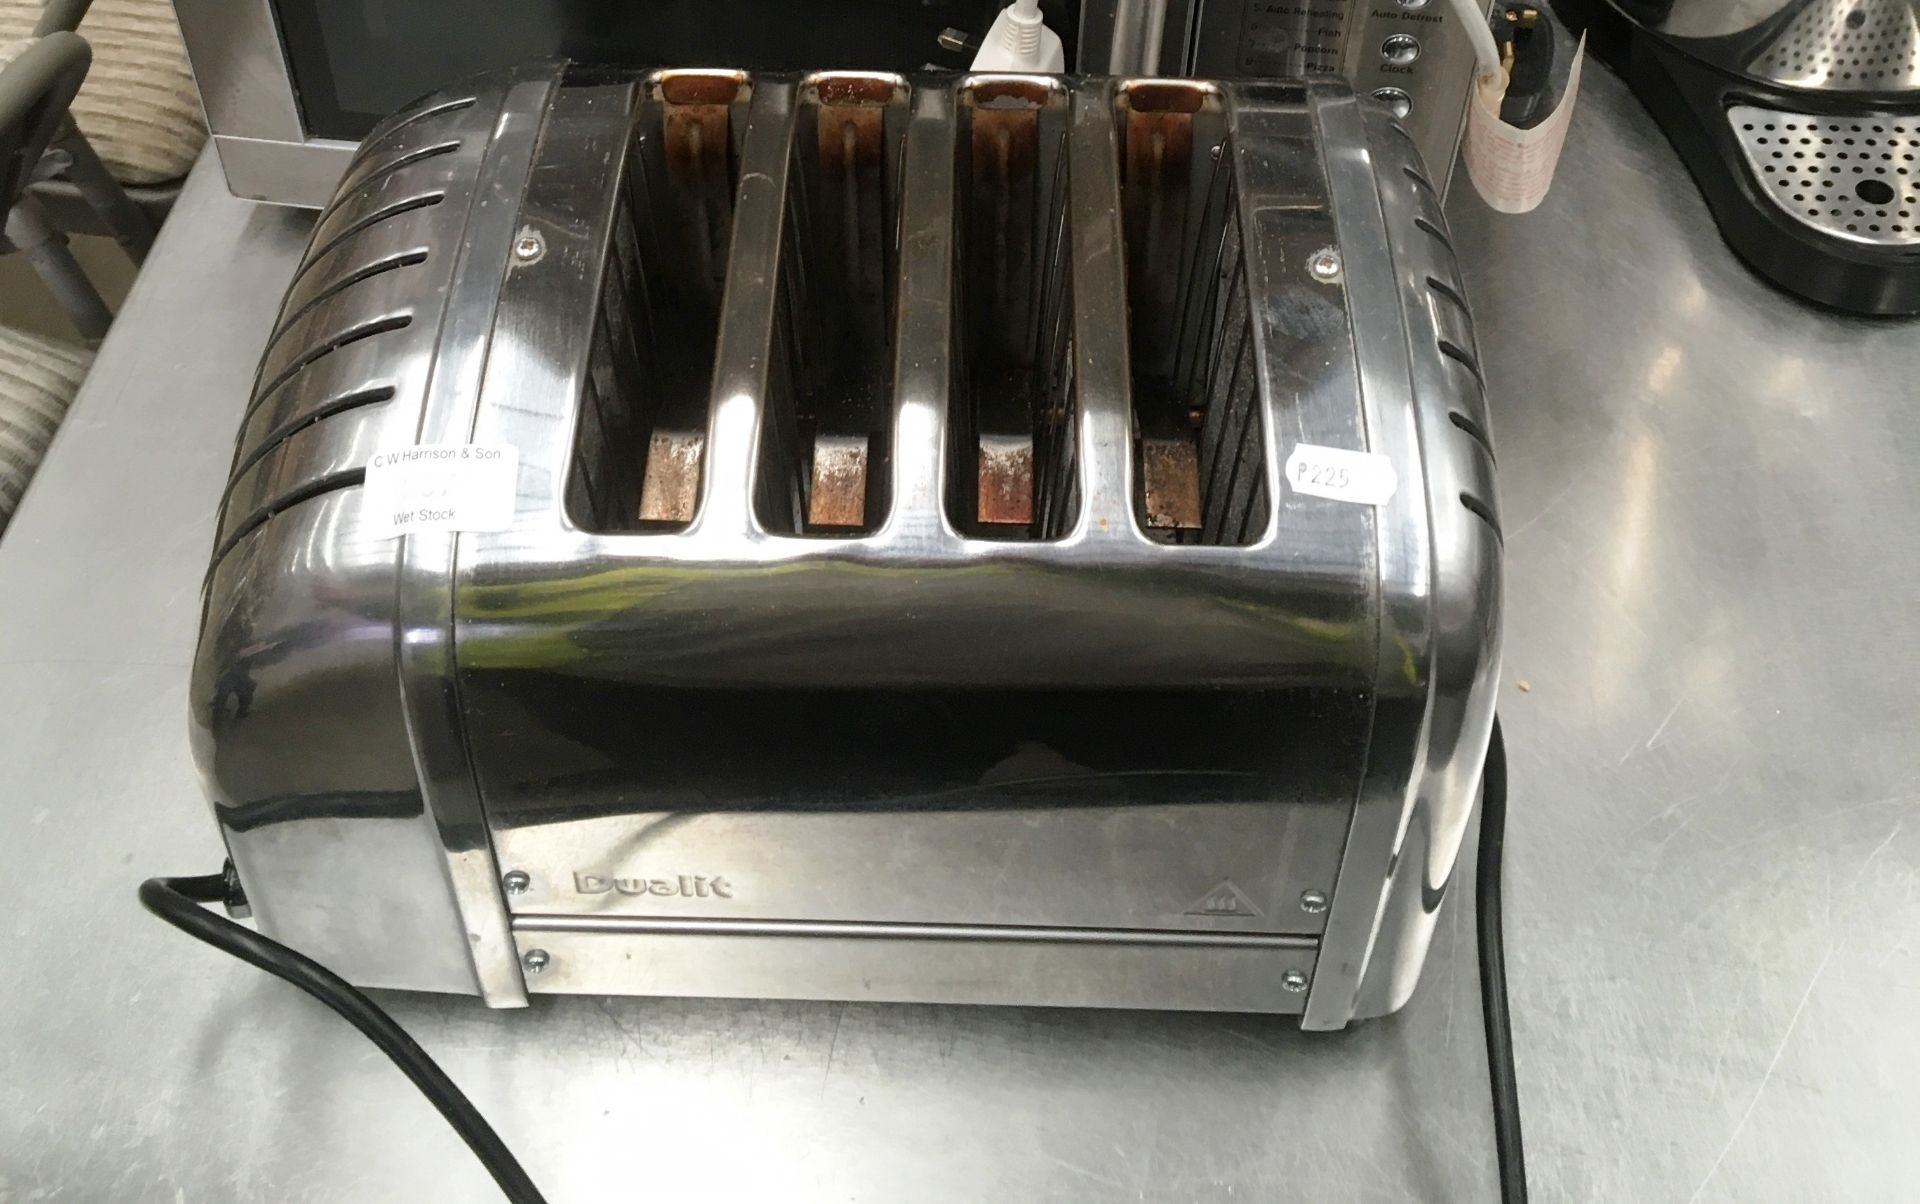 A Dualit four slice toaster - 240v